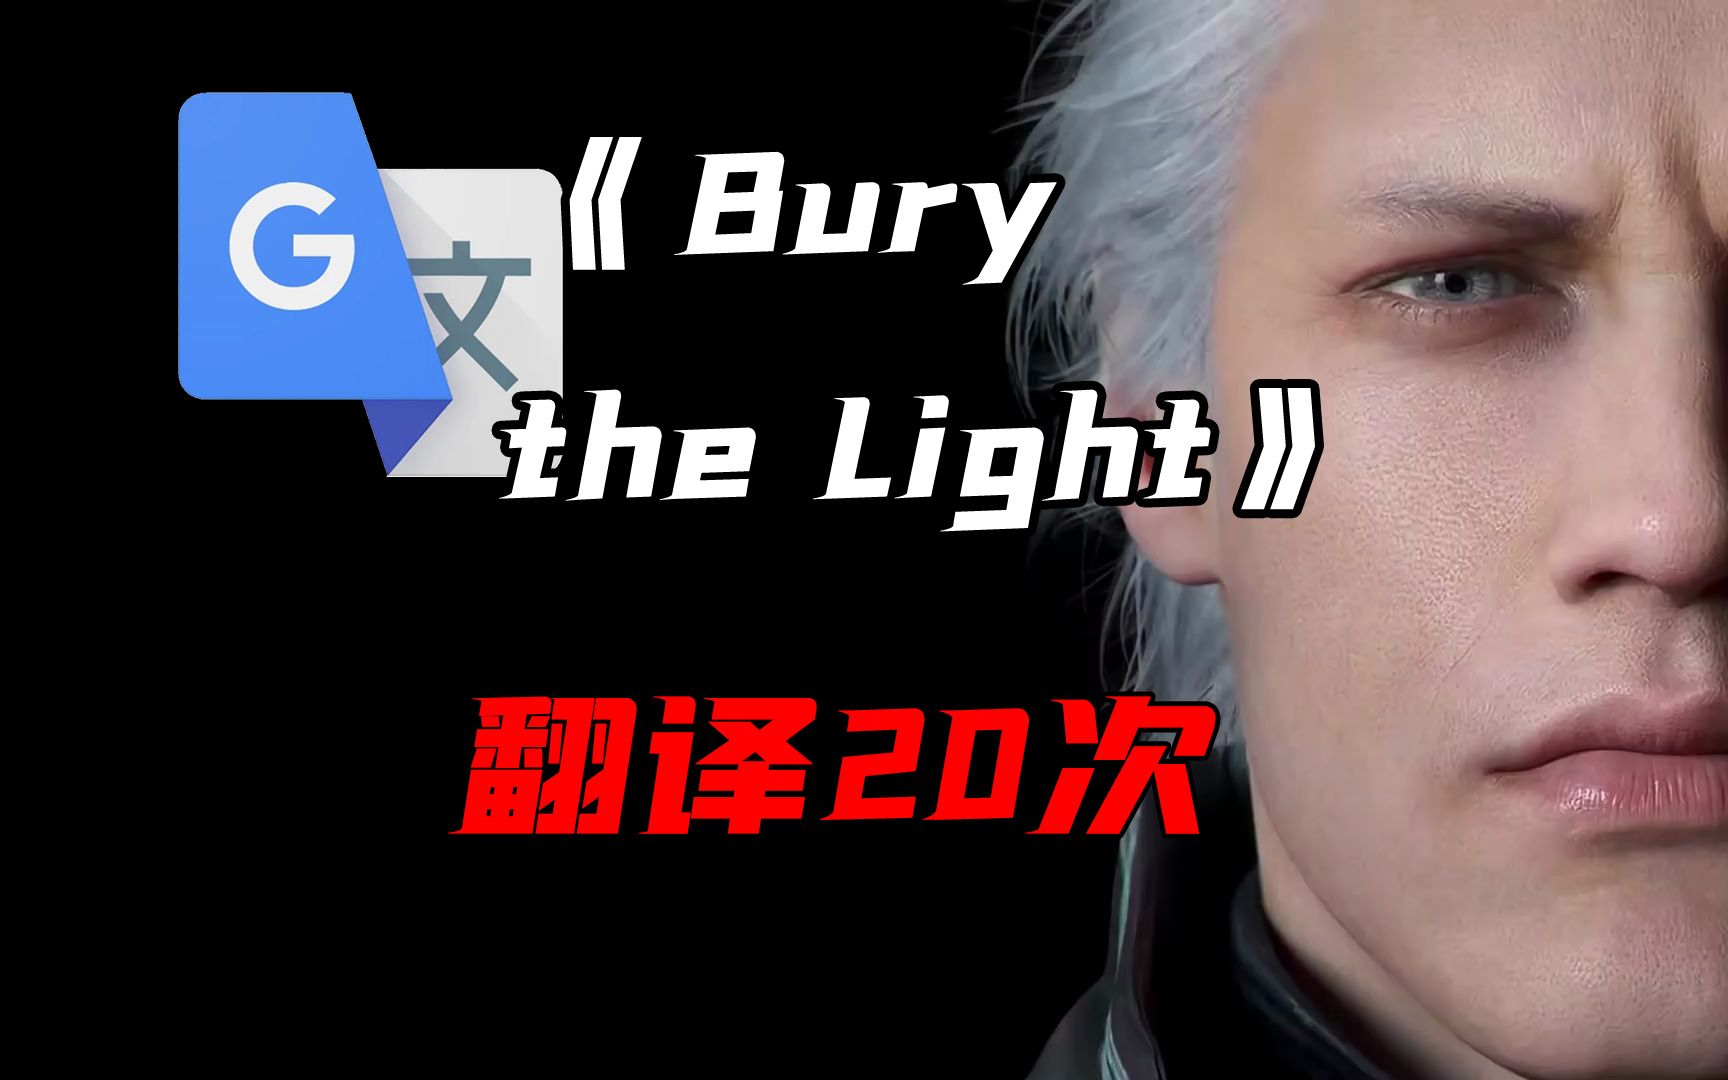 《Bury The Light》，但是谷歌翻译20次